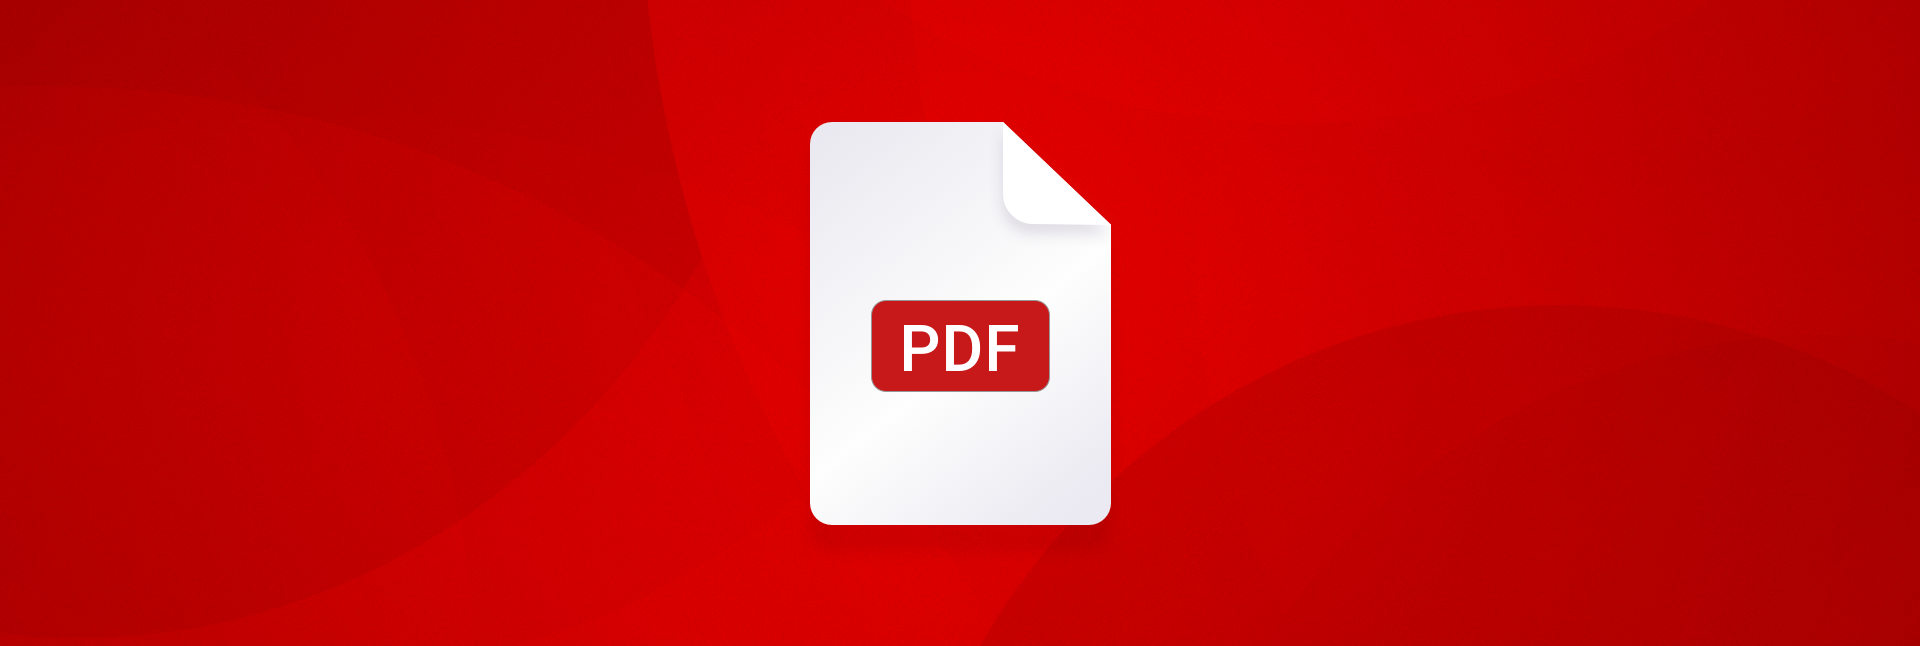 best free pdf editor for mac 2018